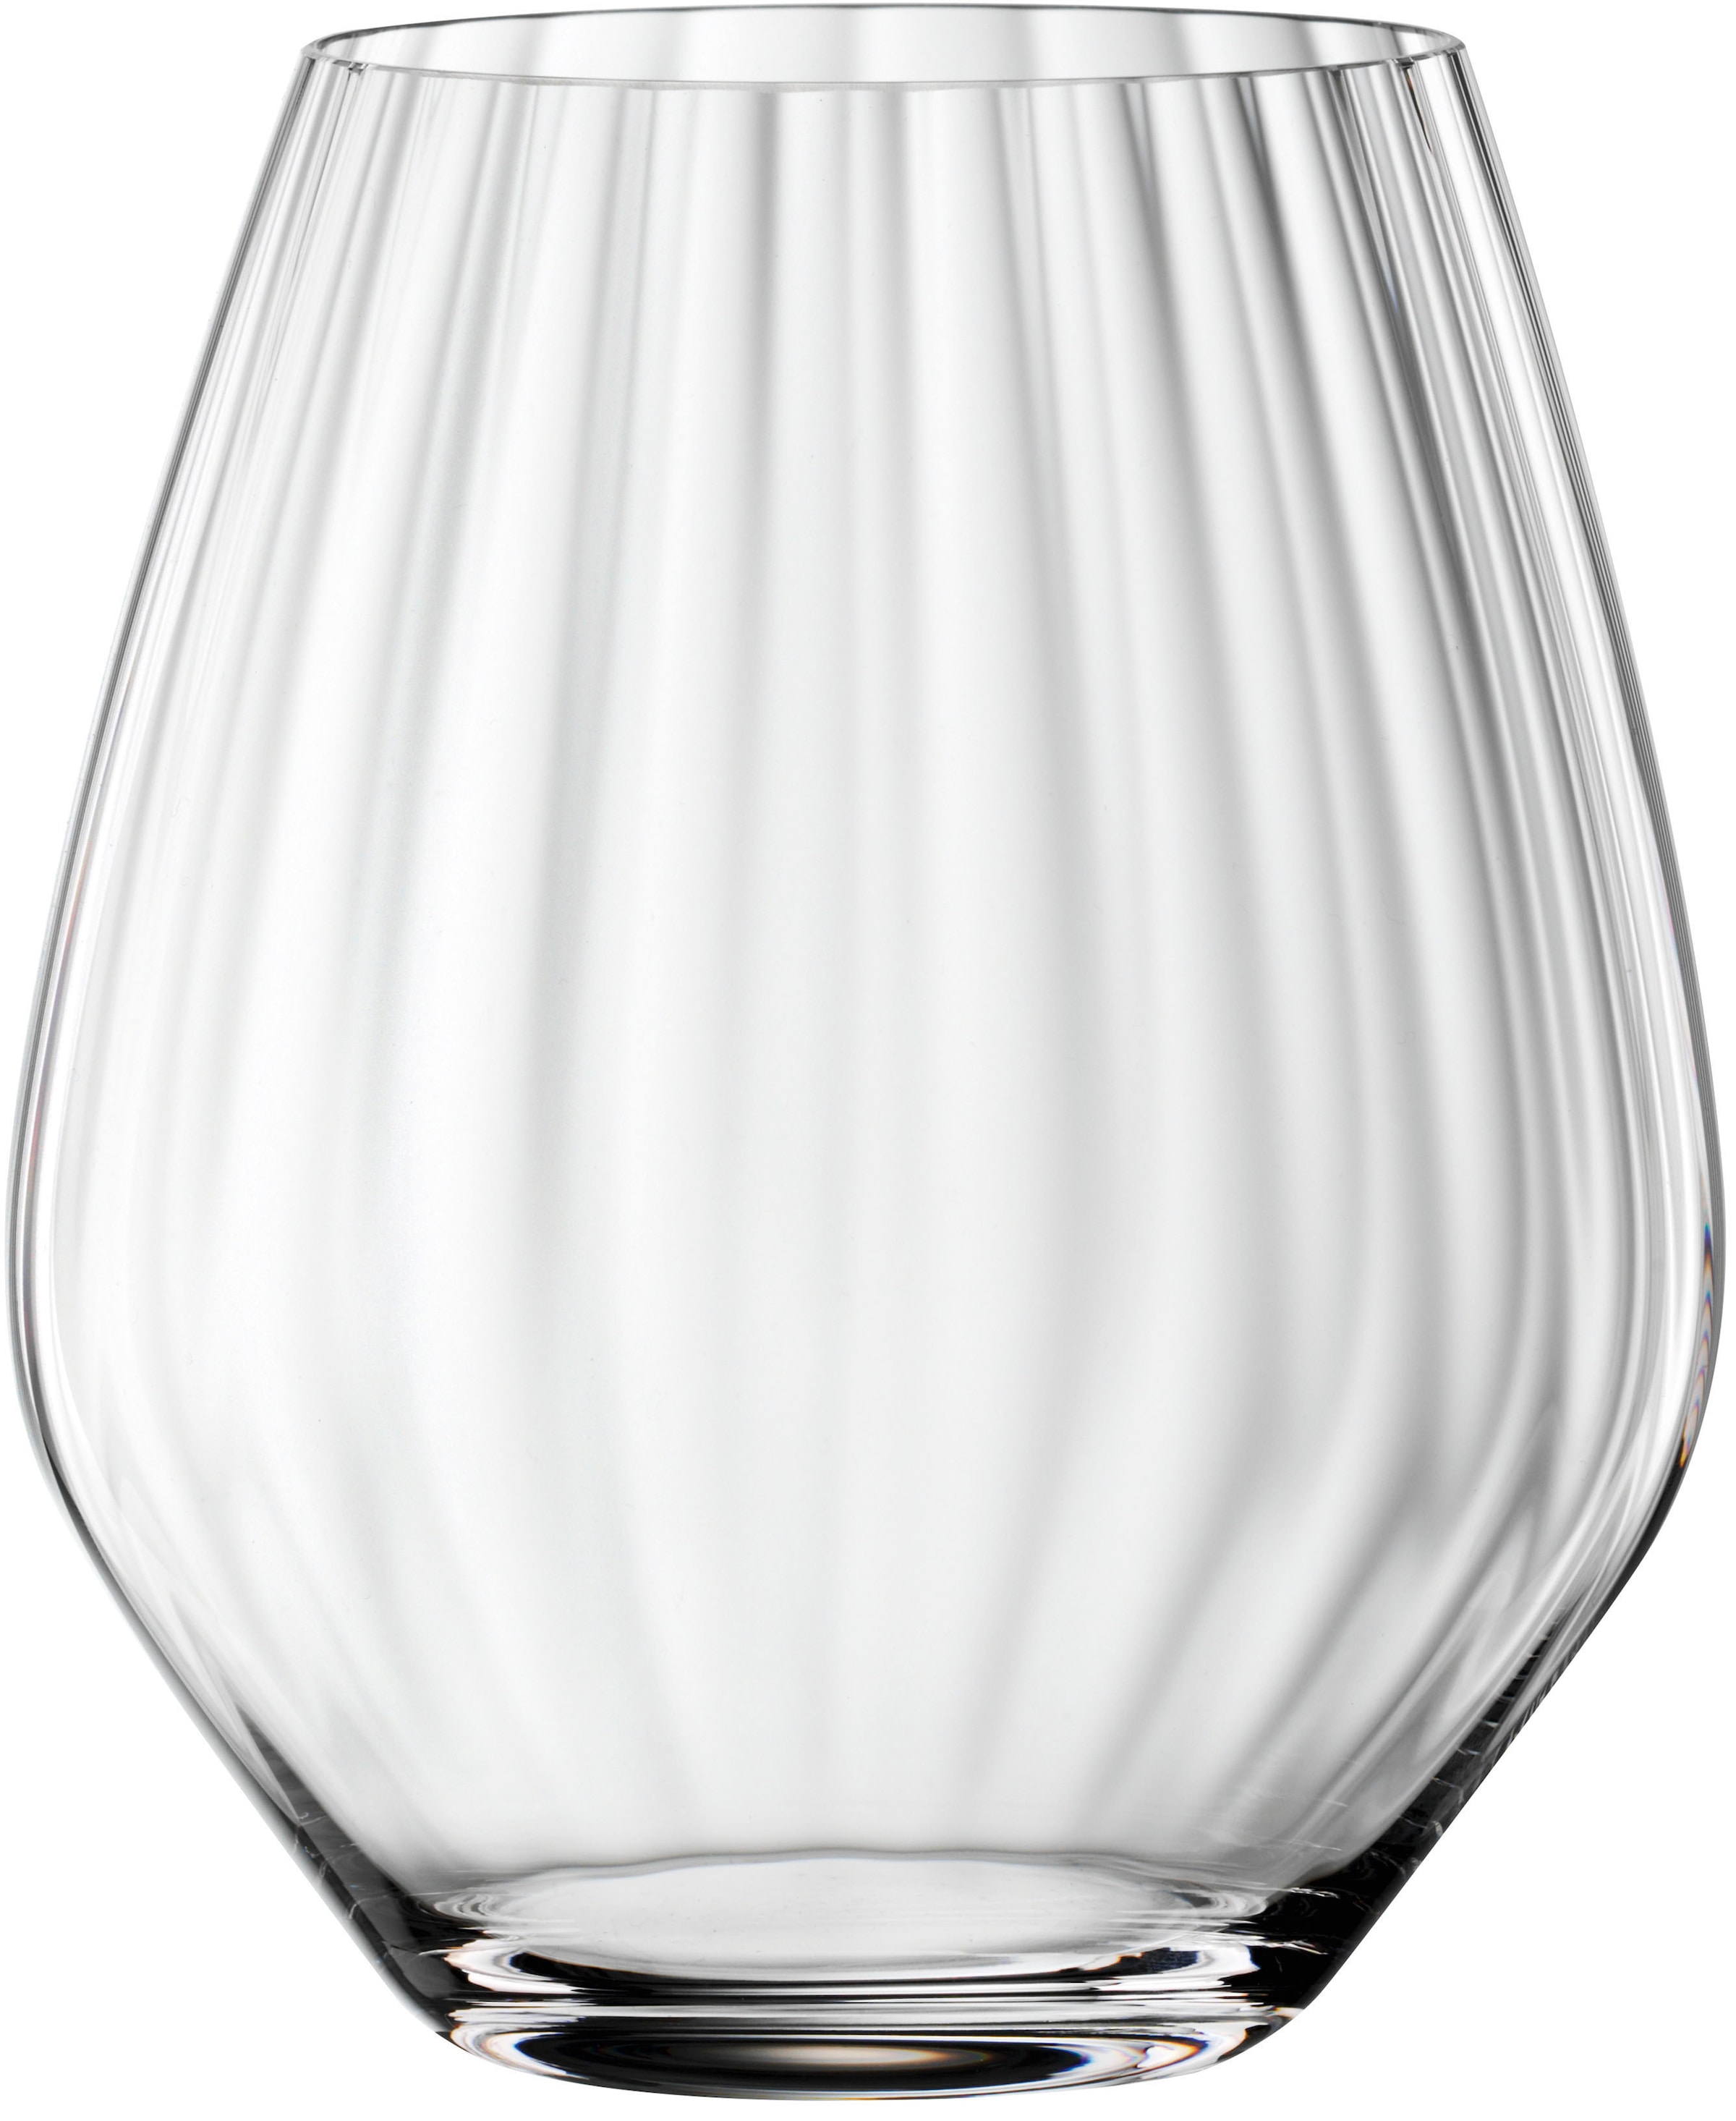 SPIEGELAU Cocktailglas »Special Glasses«, (Set, 4 tlg., Set bestehend aus 4 Gläsern), 625 ml, 4-teilig